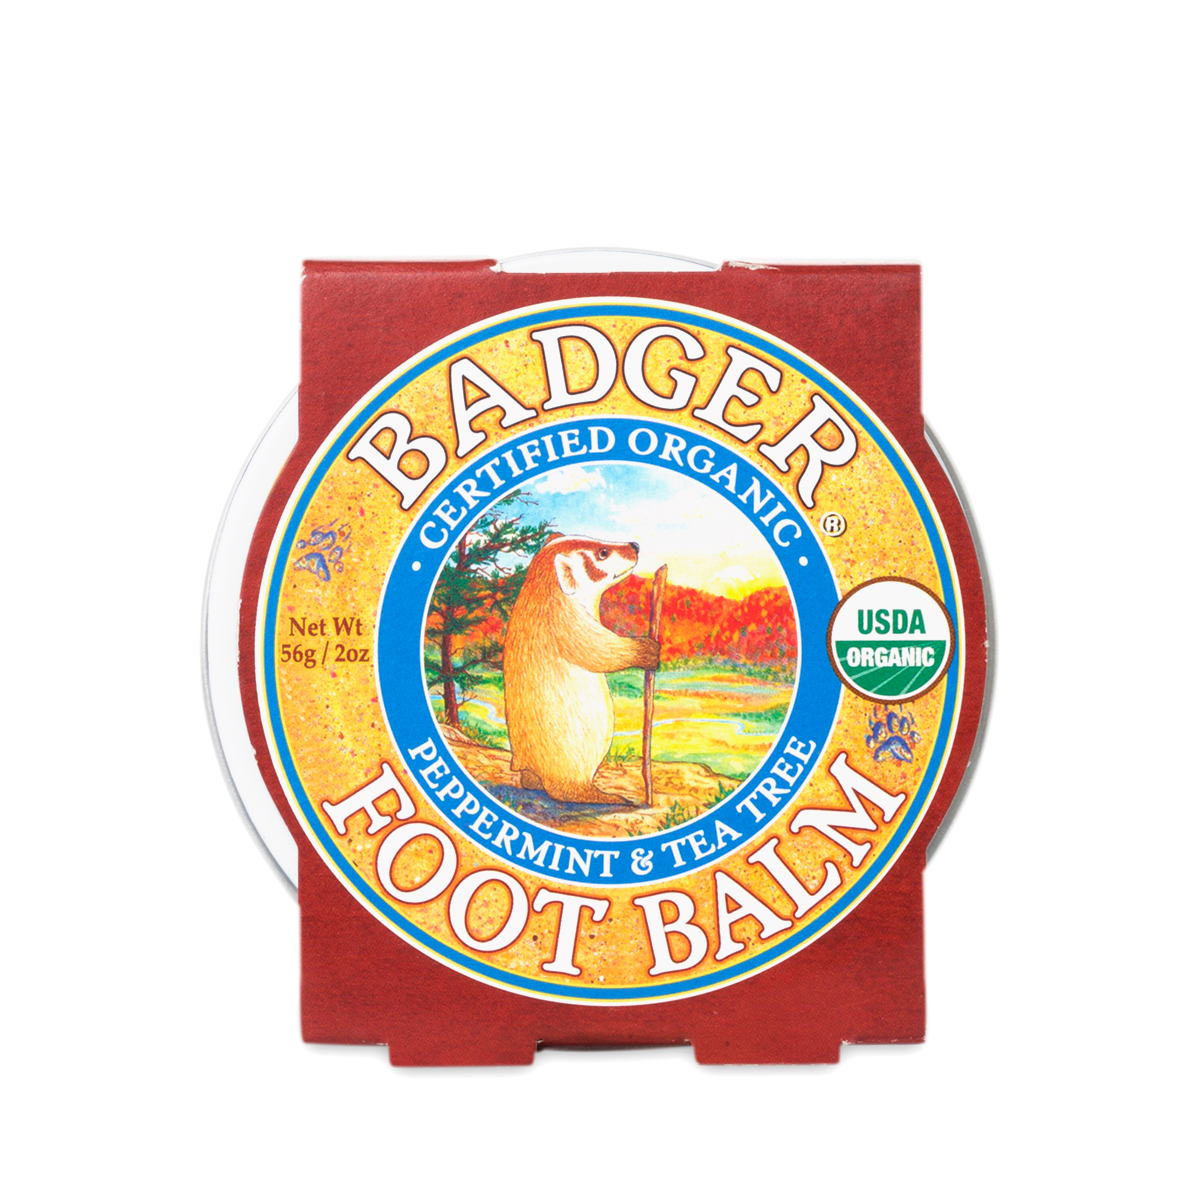 Badger Foot Balm 2 oz jar